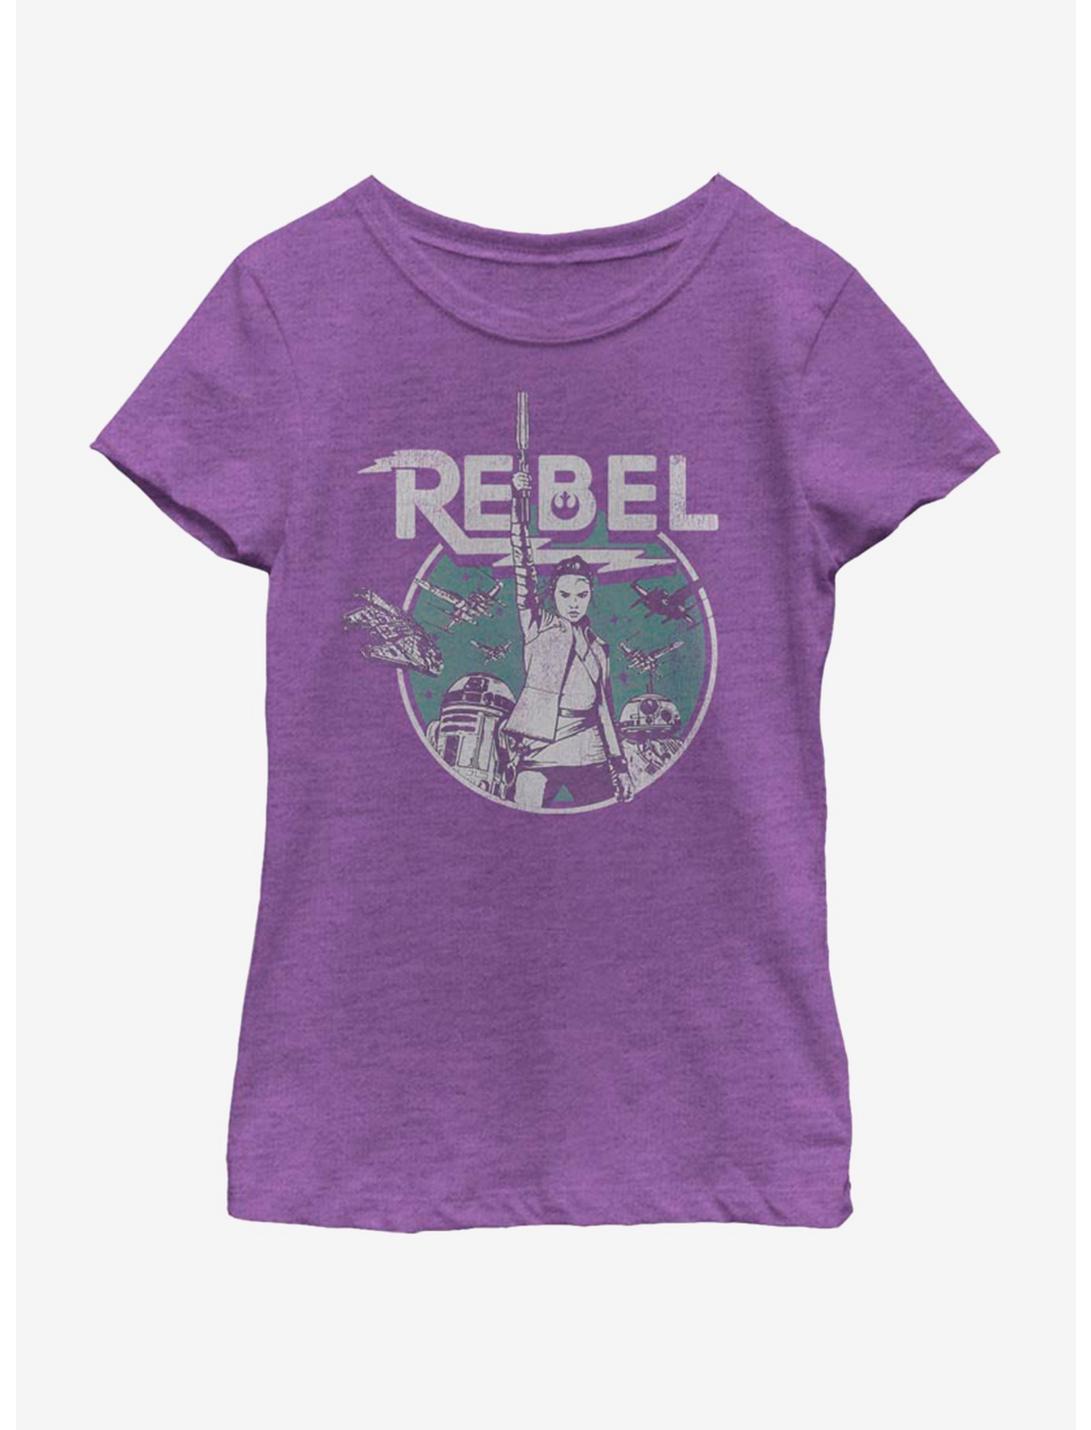 Star Wars Rebel Youth Girls T-Shirt, PURPLE BERRY, hi-res